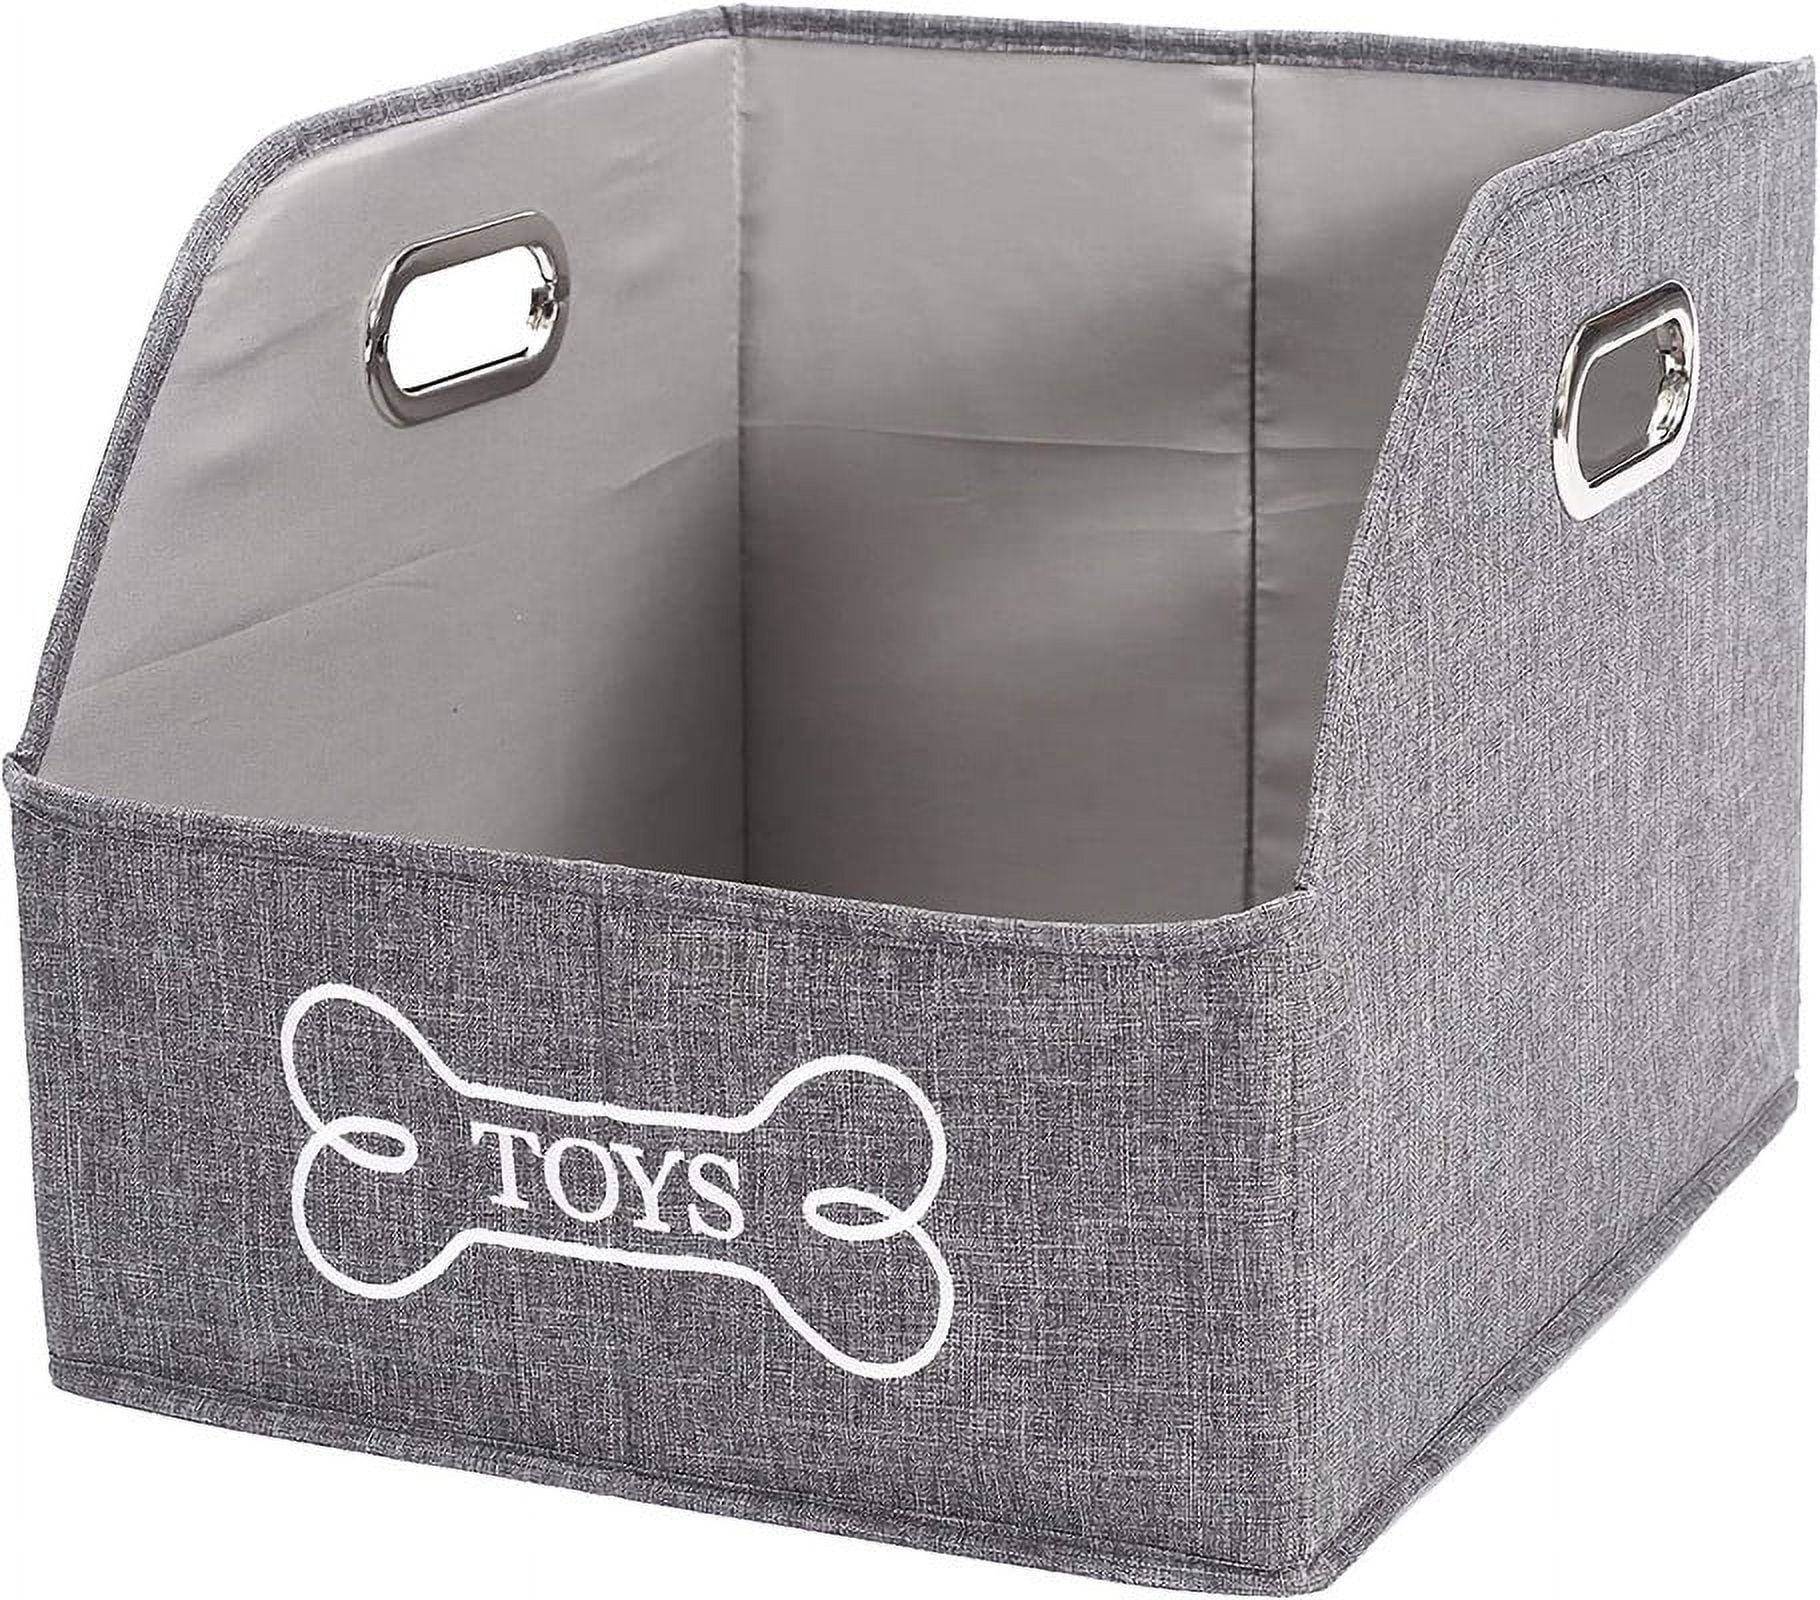 Wood Toy Storage Bin, Dog Toy Basket, Dog Toy Storage Box, Large Dog Stuff  Organizer with Handle, Dog Toy Bin with Chalkboard and Marker, Toy Storage